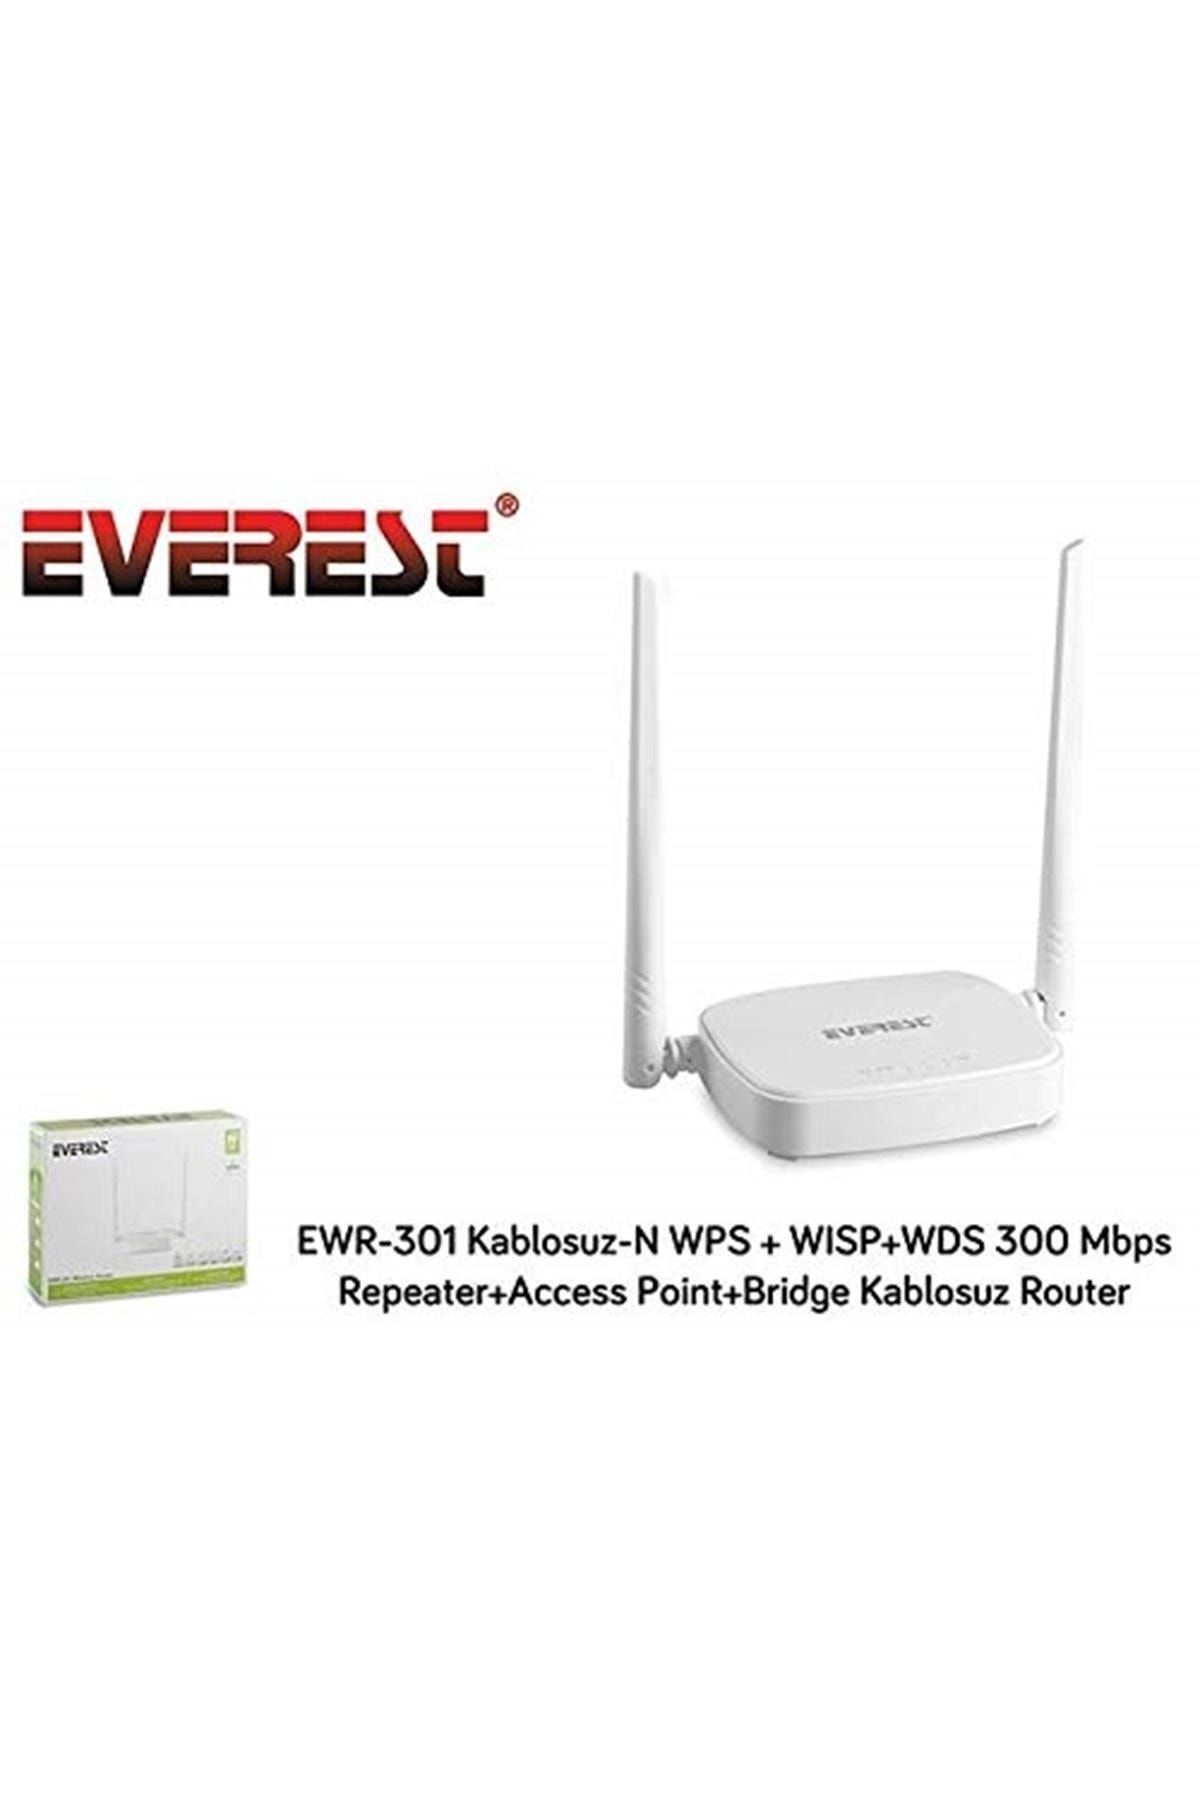 Everest Ewr-301 Kablosuz-n Wps + Wisp+wds 300 Mbps Repeater+access Point+bridge Kablosuz Router